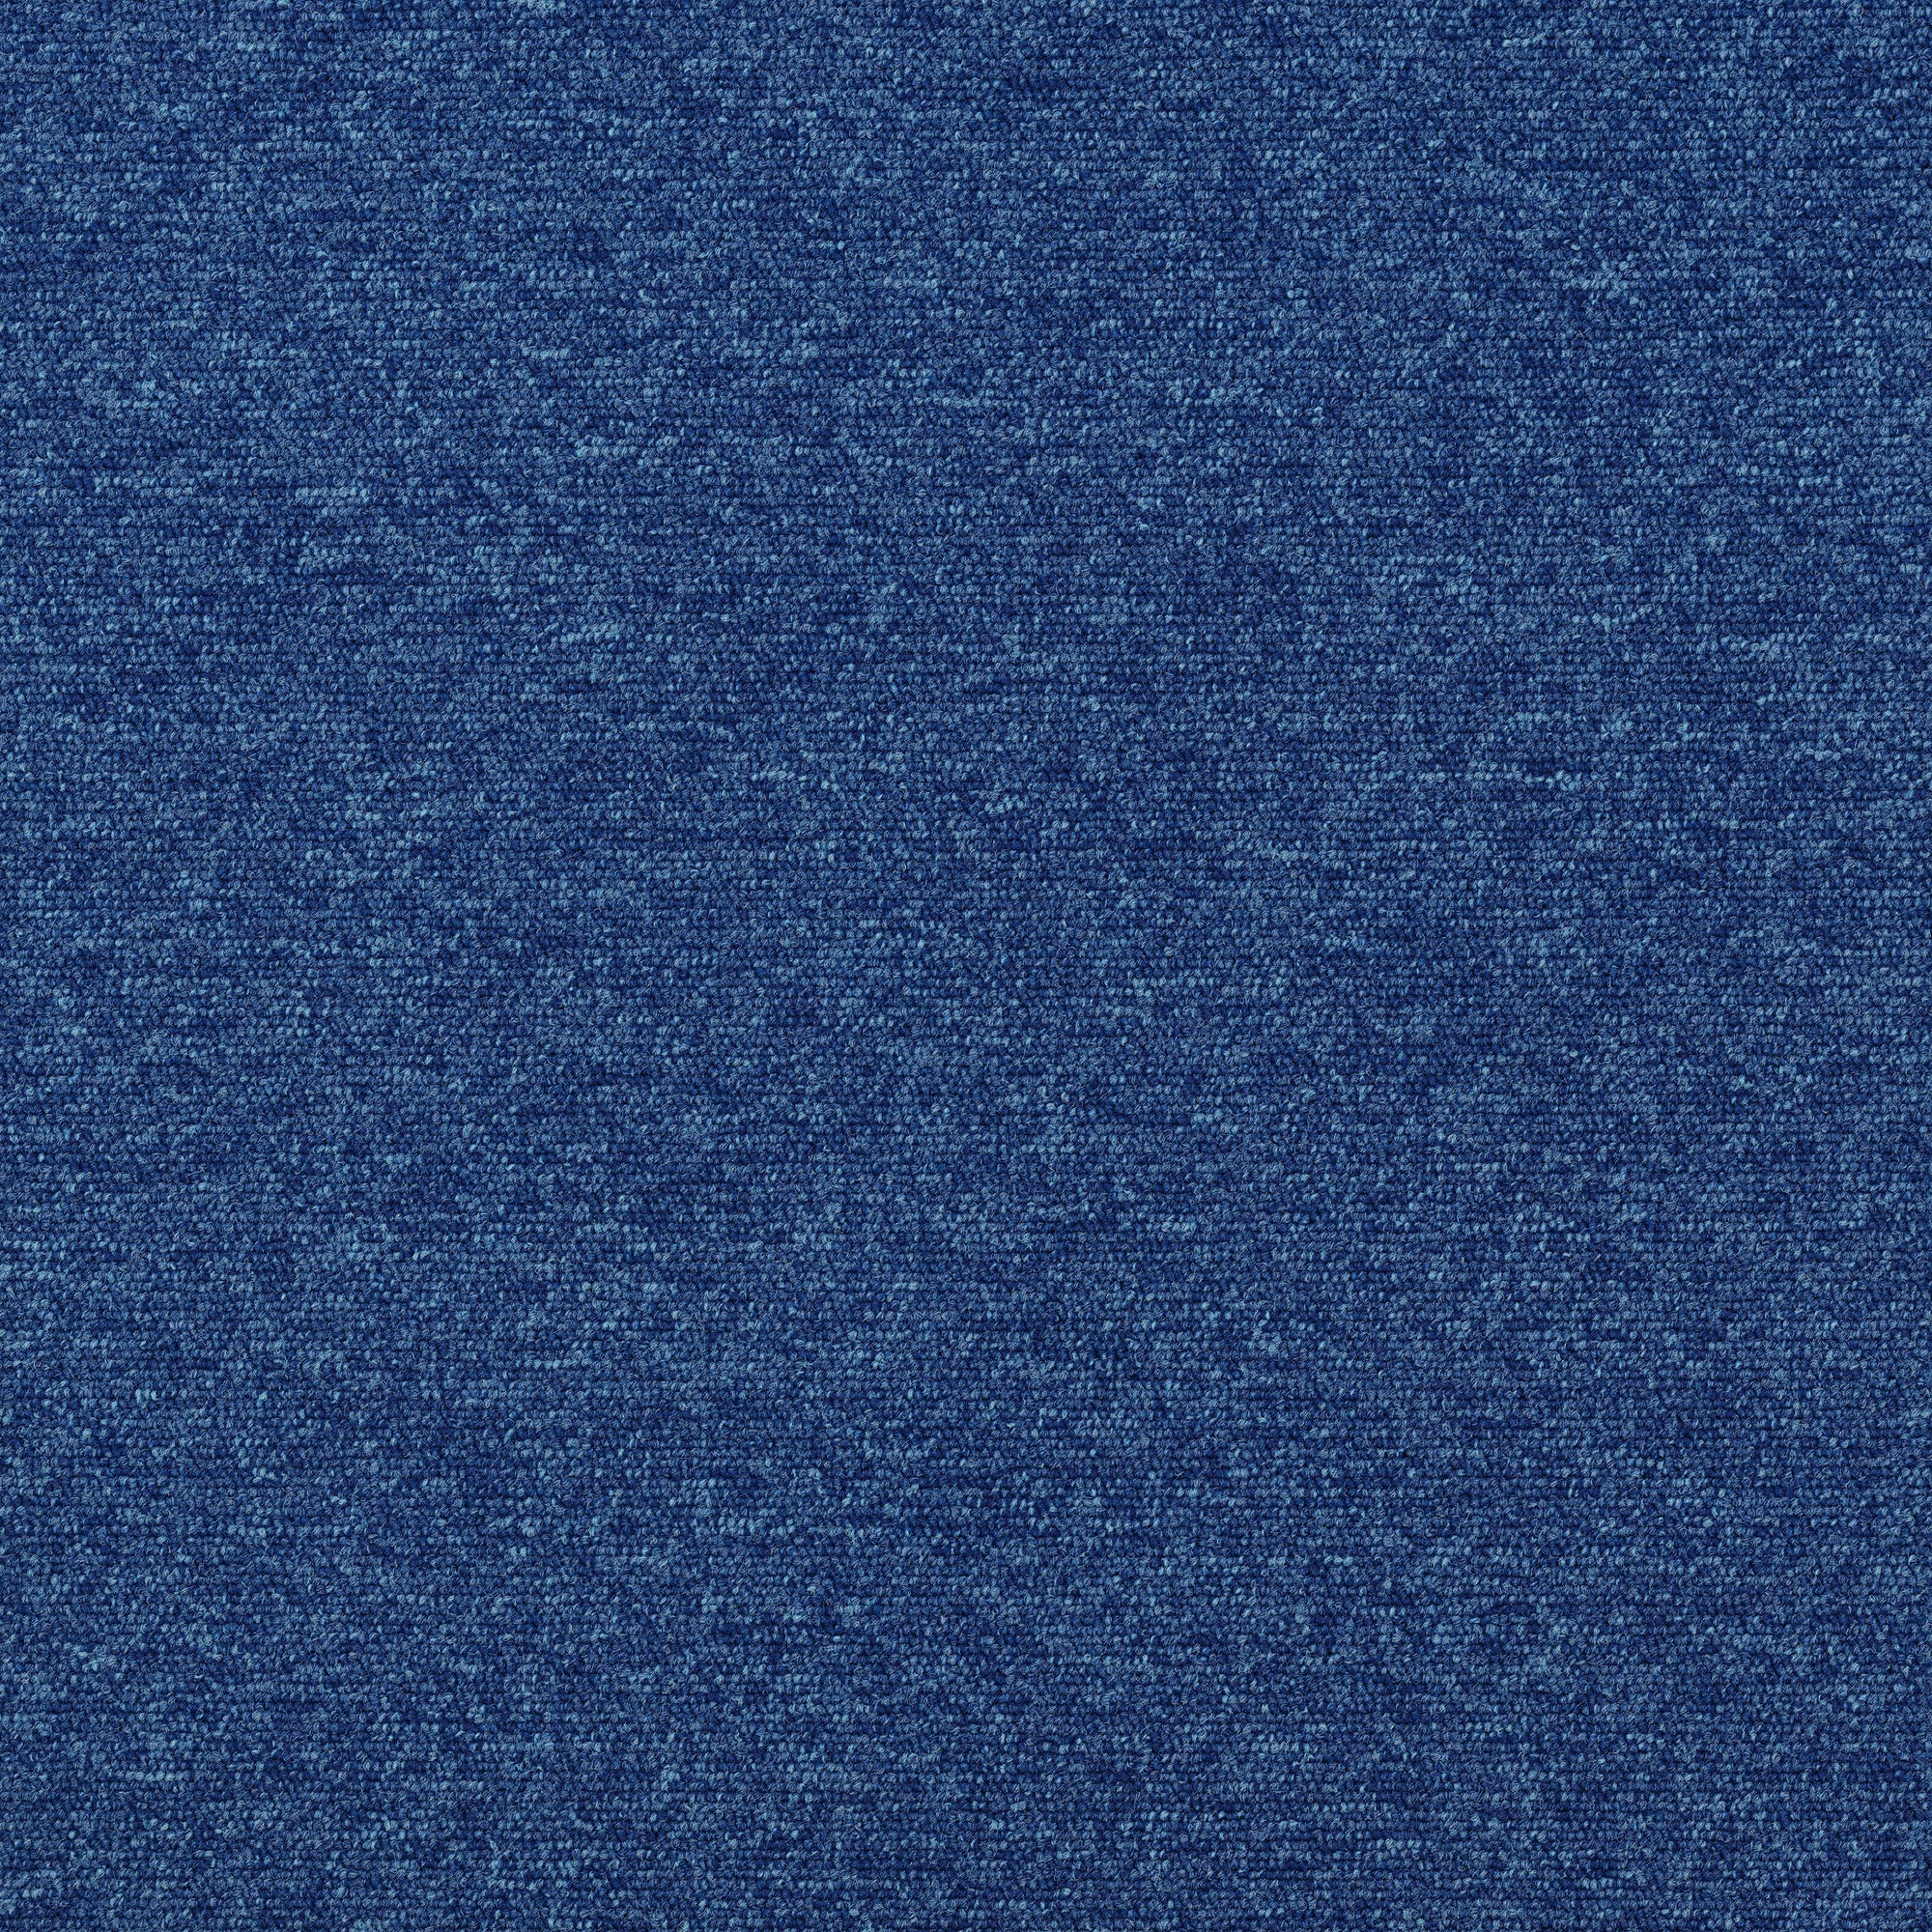 Plusfloor New Viilea Sea Blue carpet tiles for offices 100% Nylon